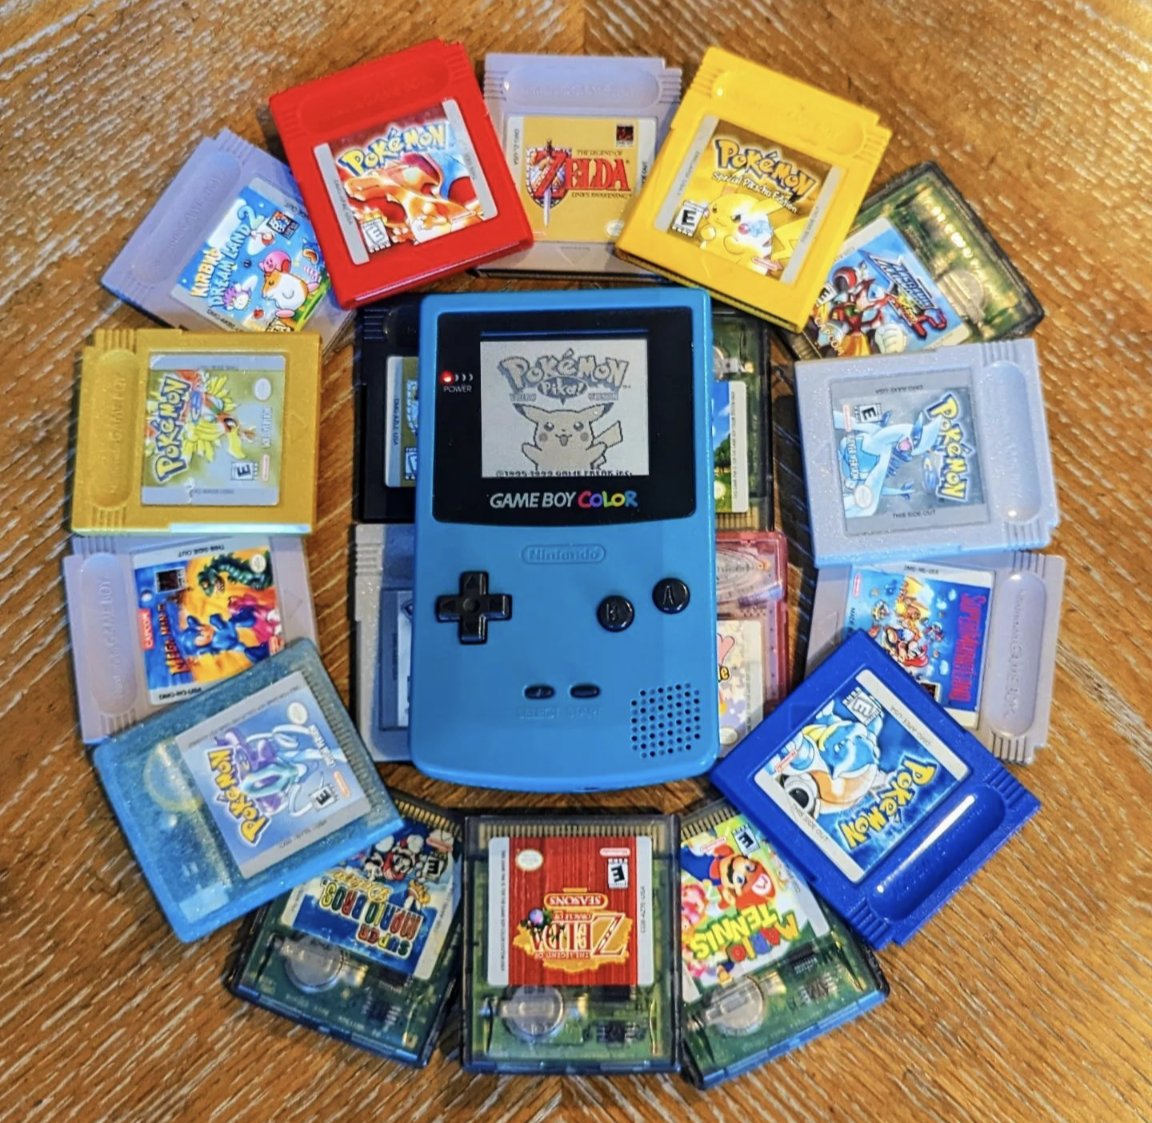 Rebuilding my GameBoy collection!!! 💥🤩 Which games/handhelds give you the most #nostalgia?! #gameboy #gameboycolor #nintendo #gaming #gamer #pokemon #zelda #SuperMarioBros #Retro #videogames